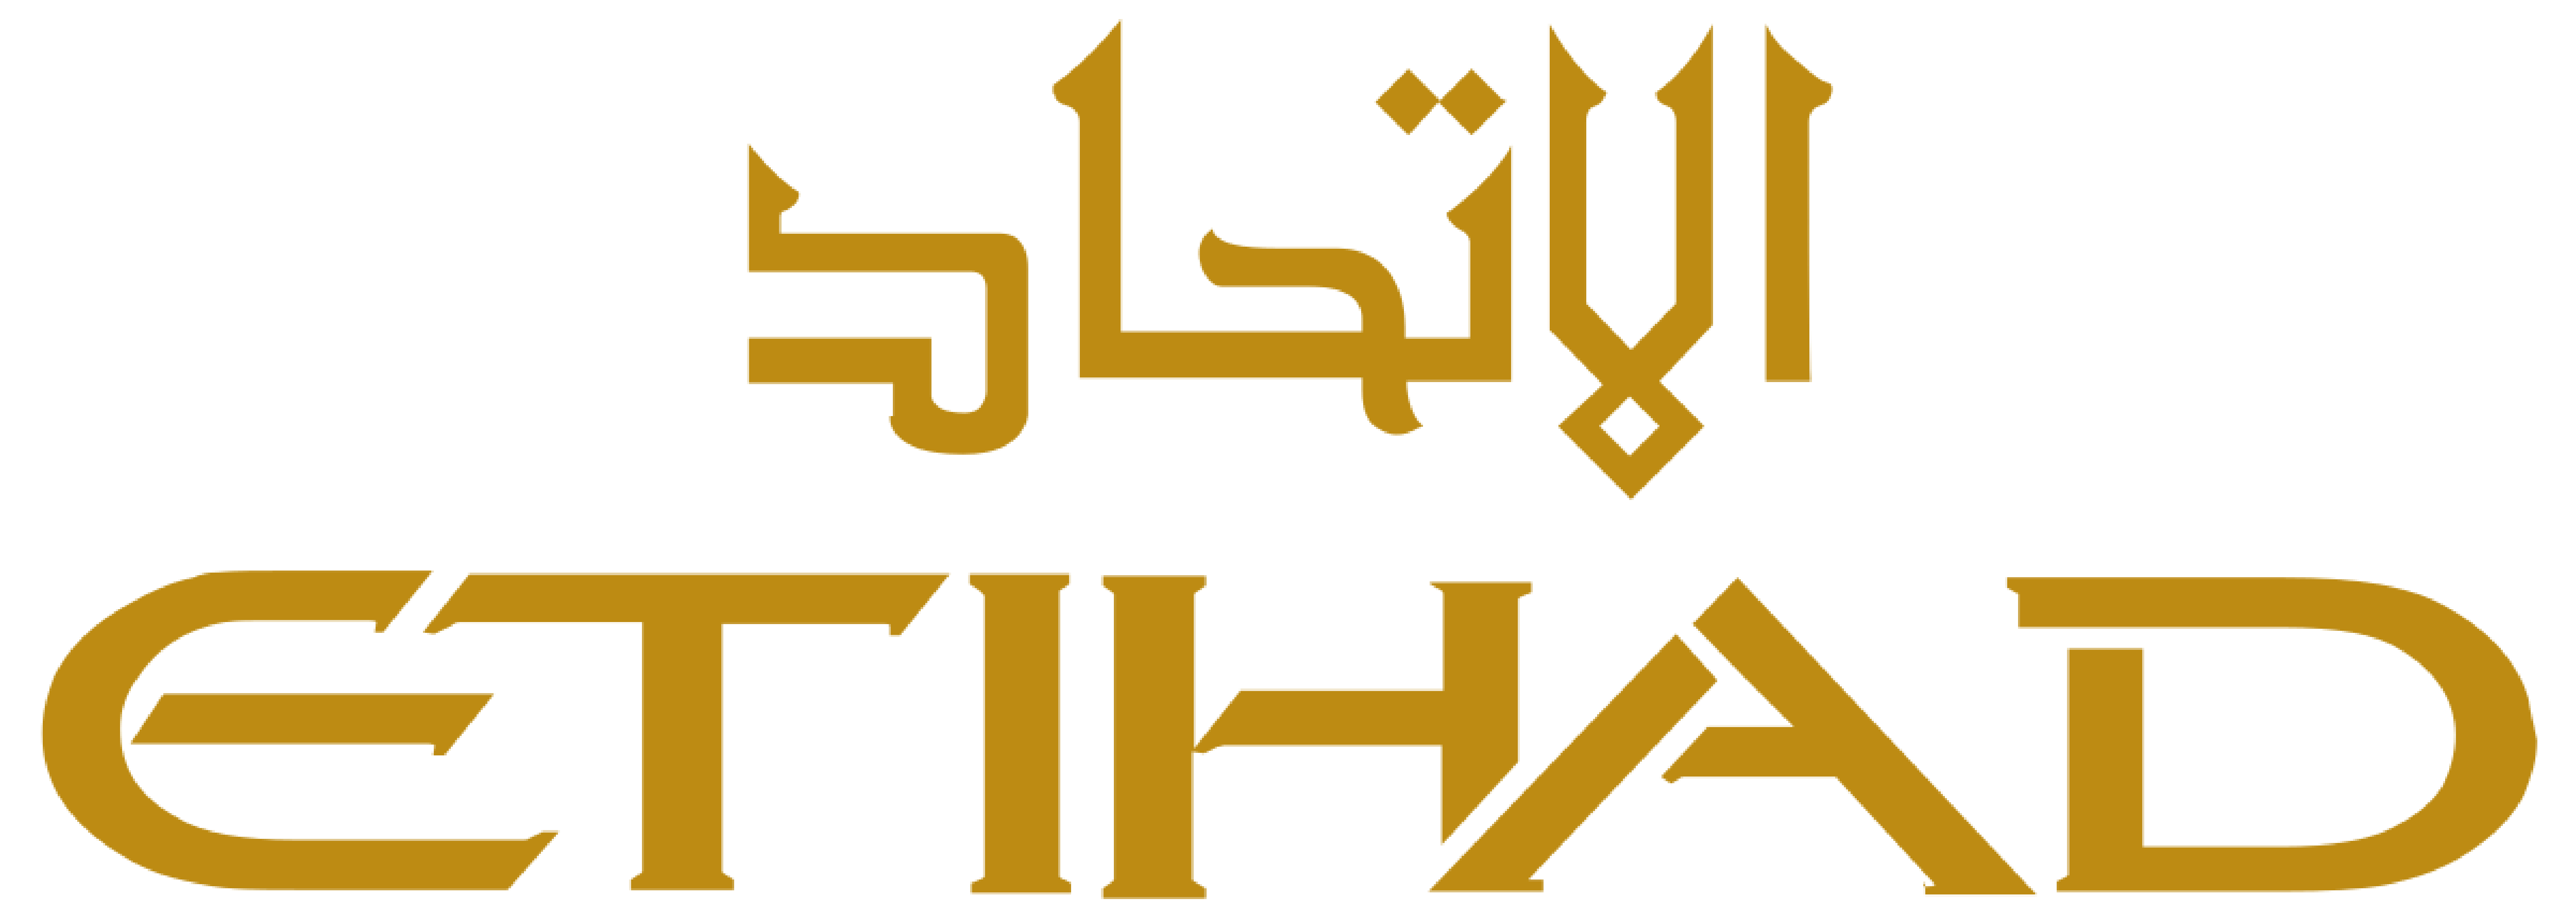 Etihad-airways-logo Resized